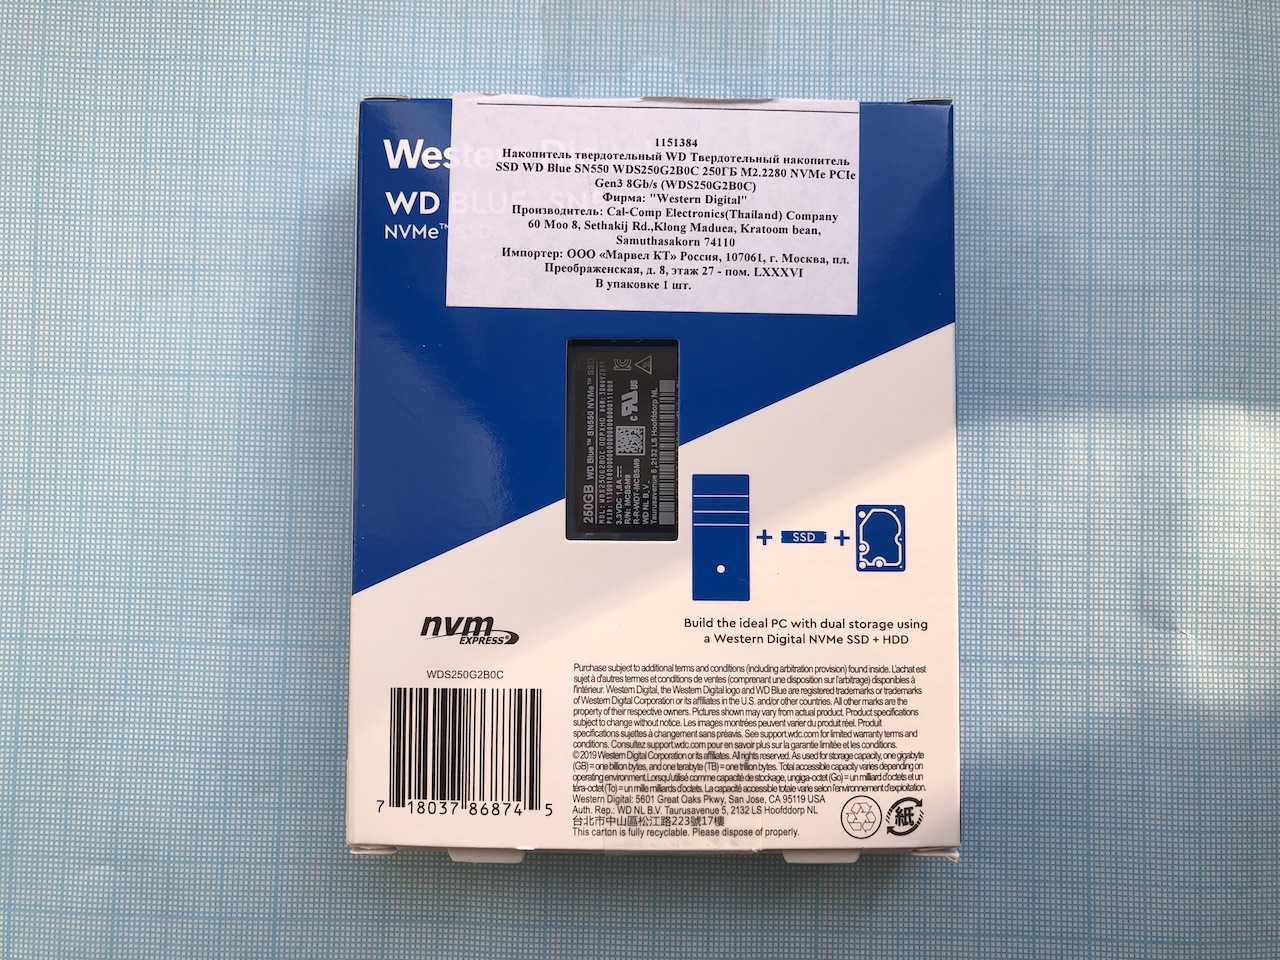 Обзор и тестирование WD Blue SN550 250GB (WDS250G2B0C)